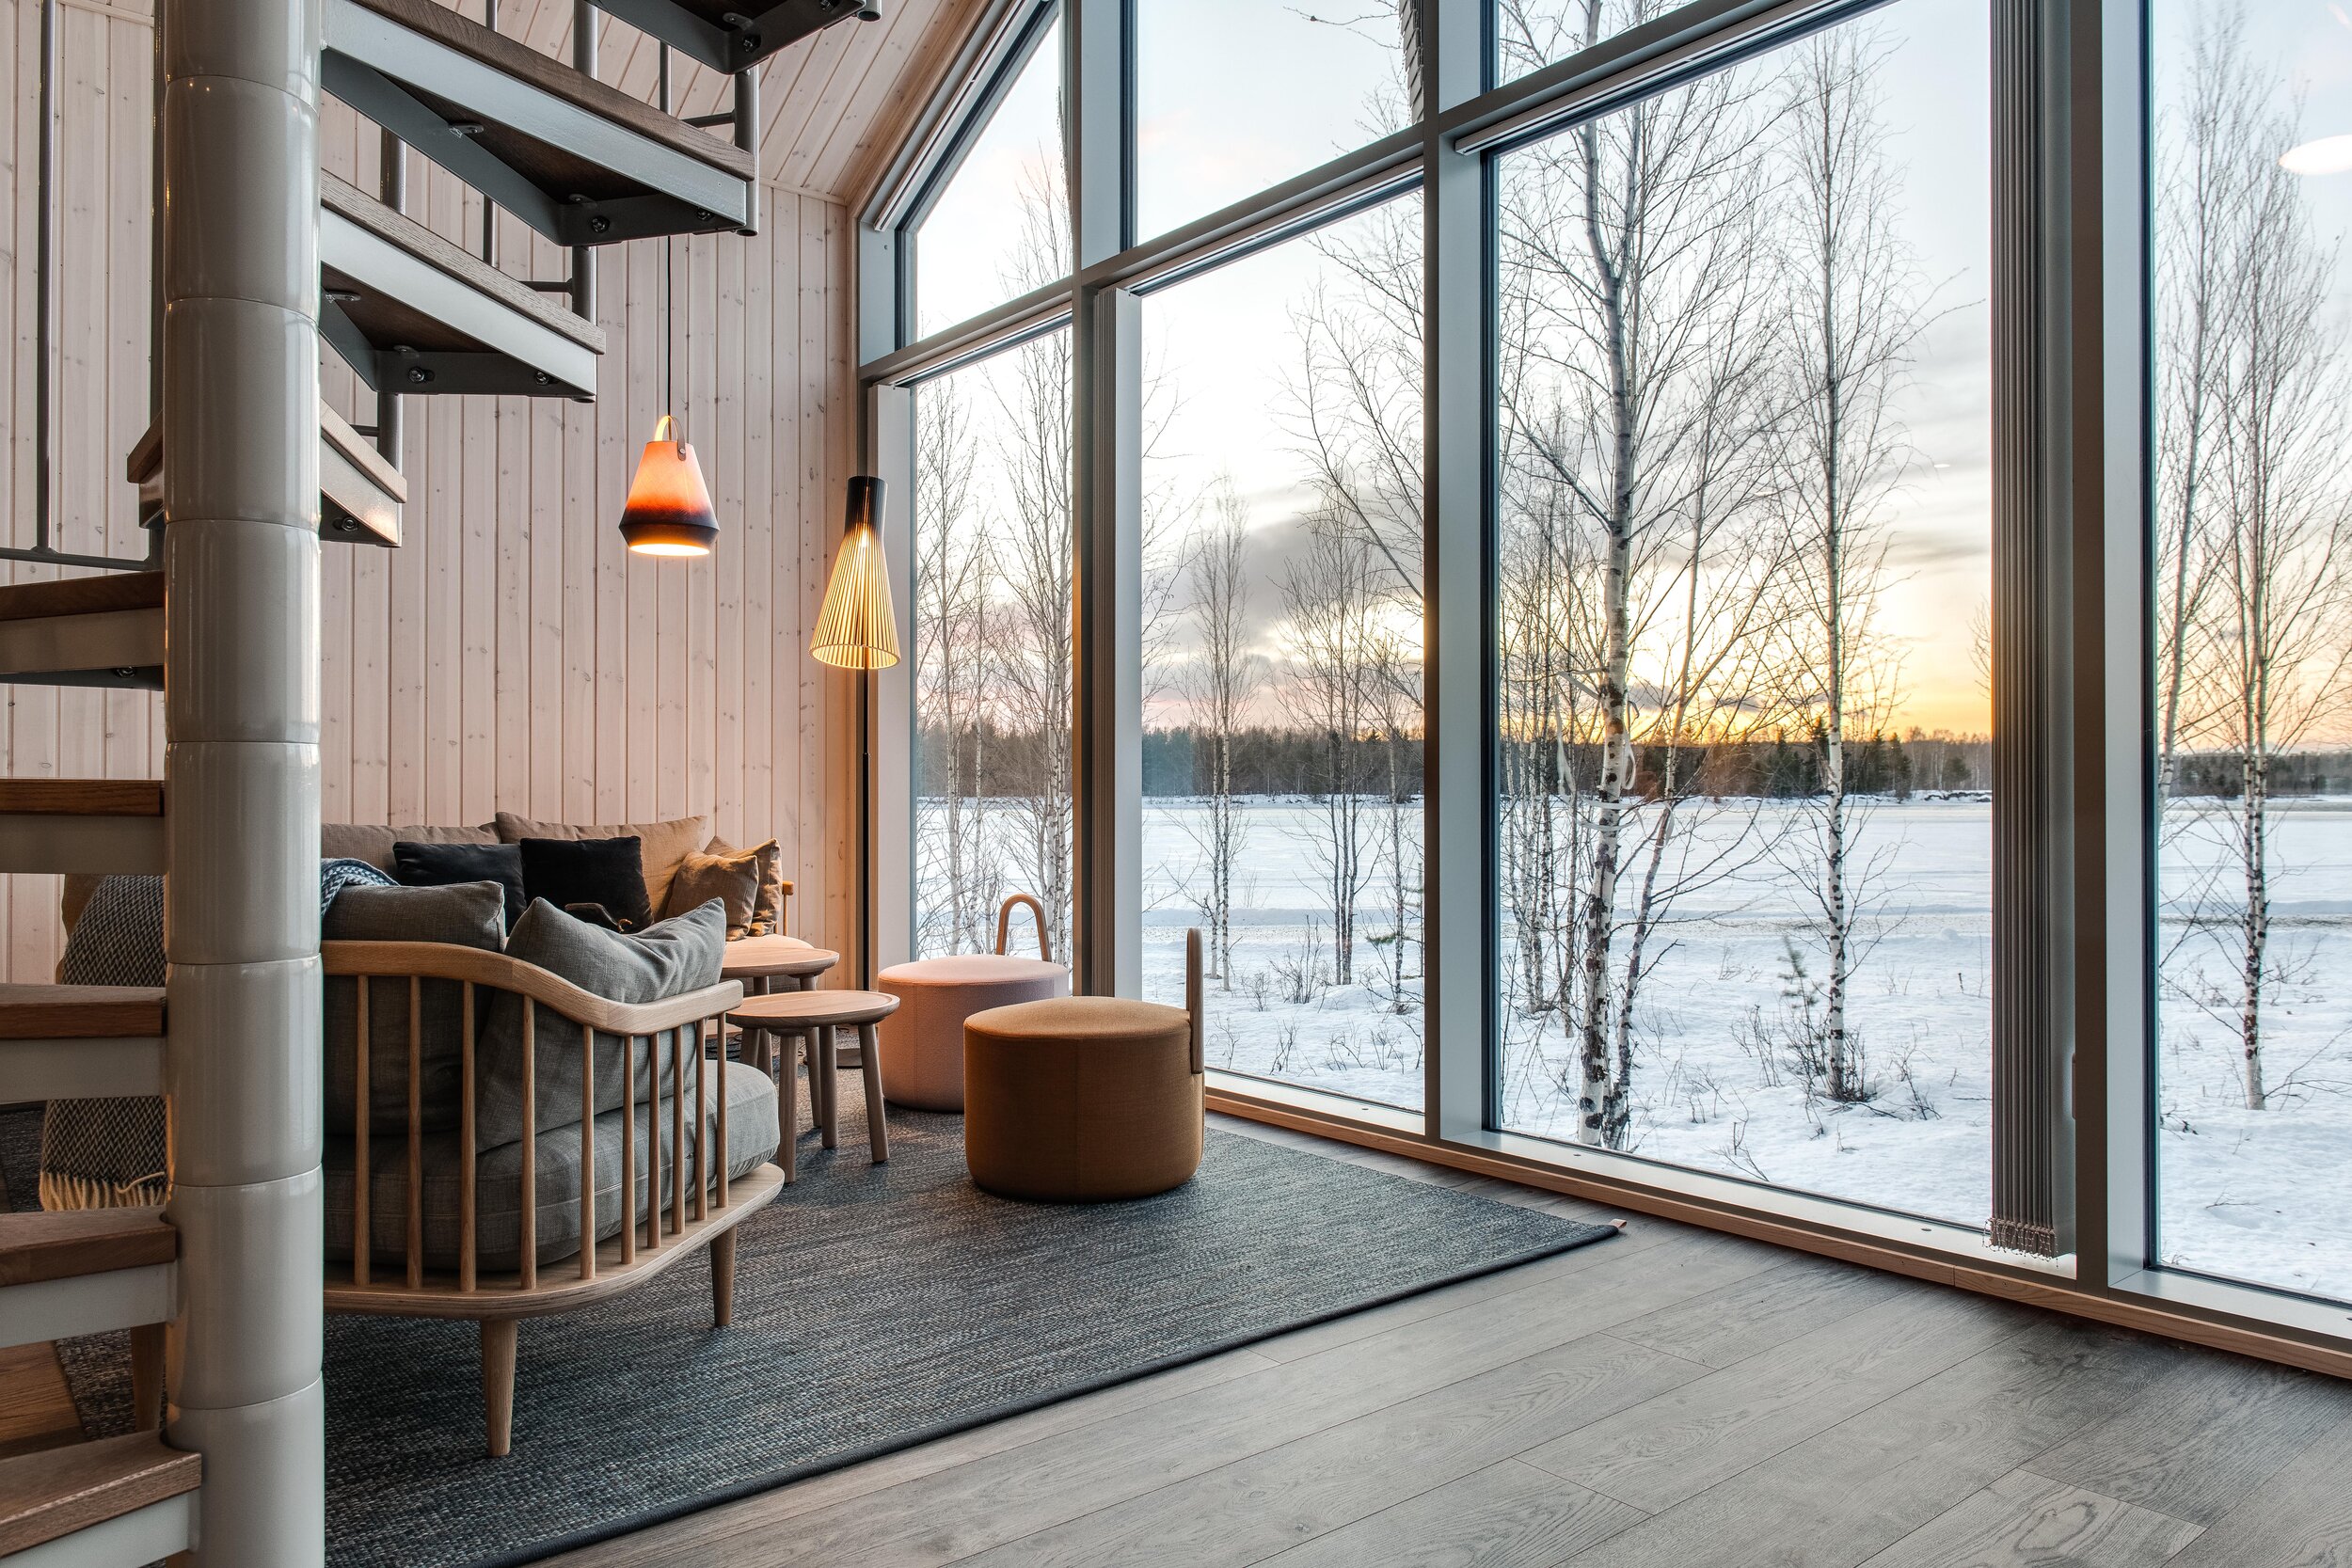 Sweden Hotels | Arctic Bath